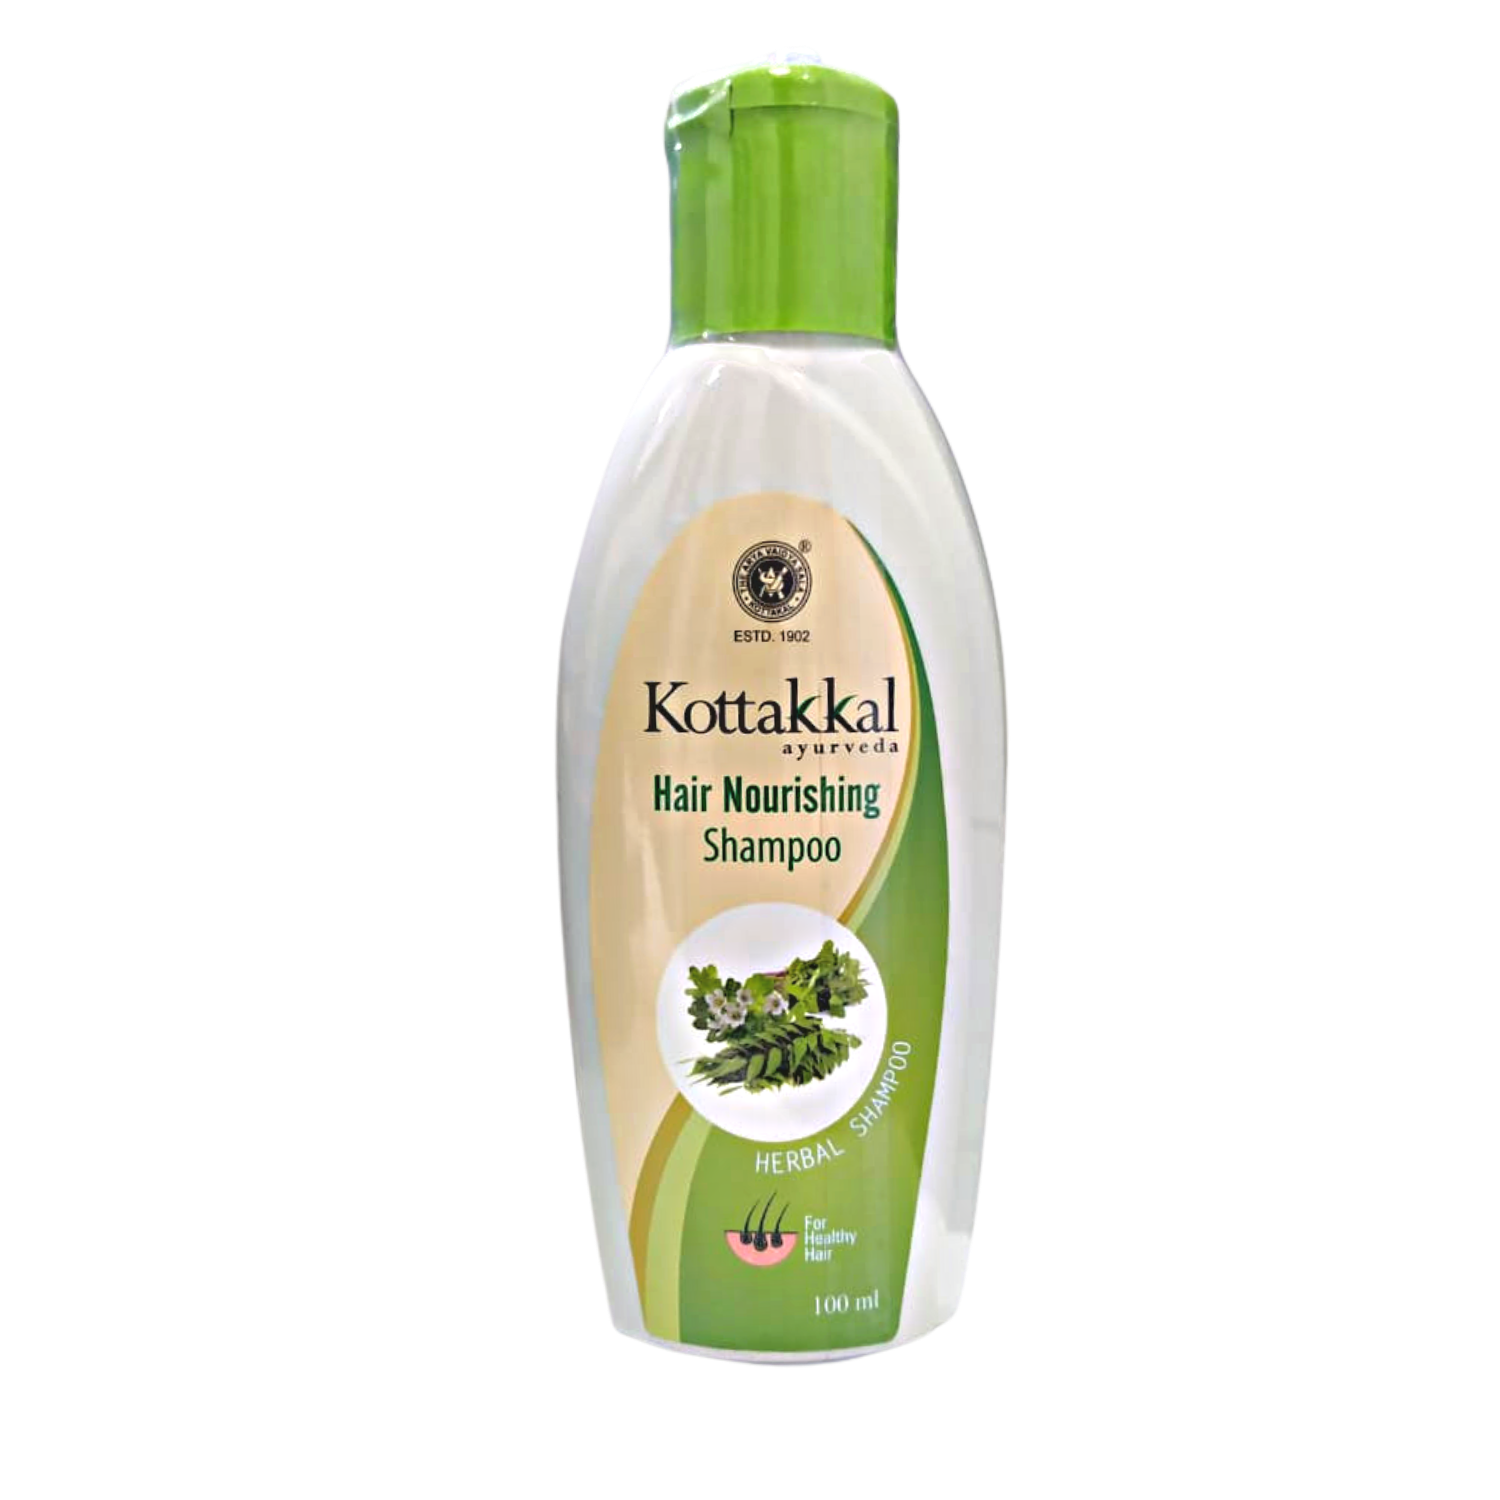 Kottakkal Hair Nourishing Shampoo 100ml -  Kottakkal - Medizzo.com